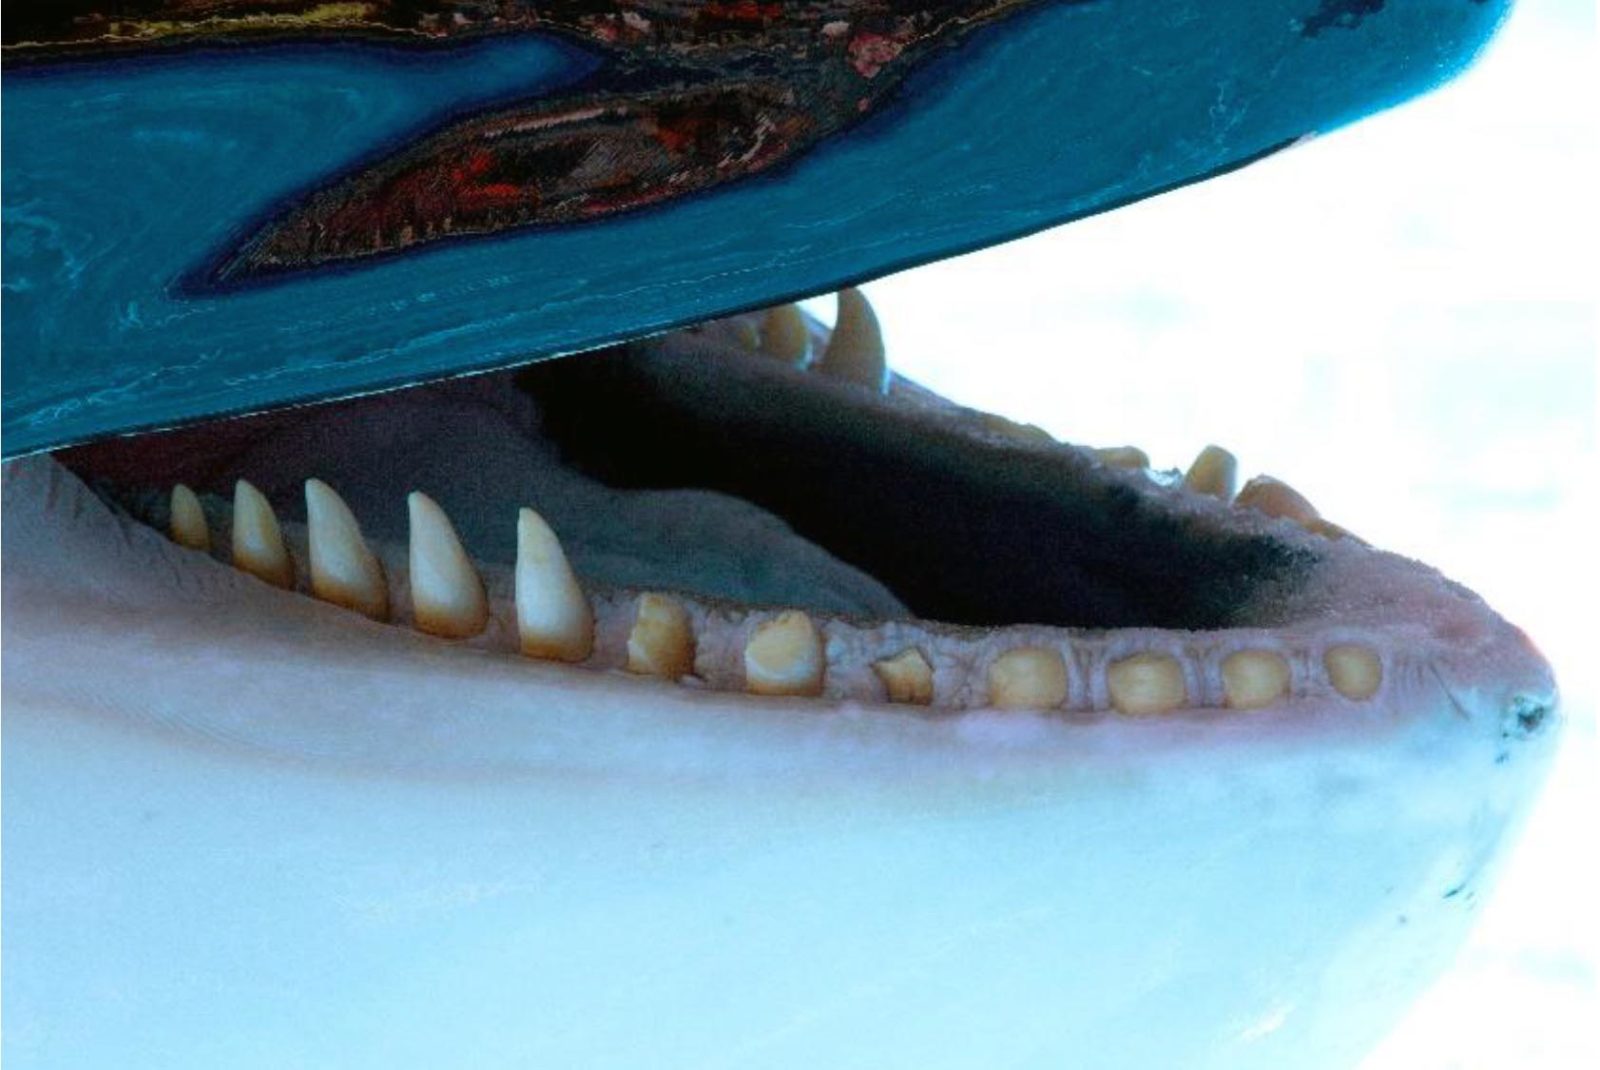 Tooth damage bites for captive orcas - Divernet.